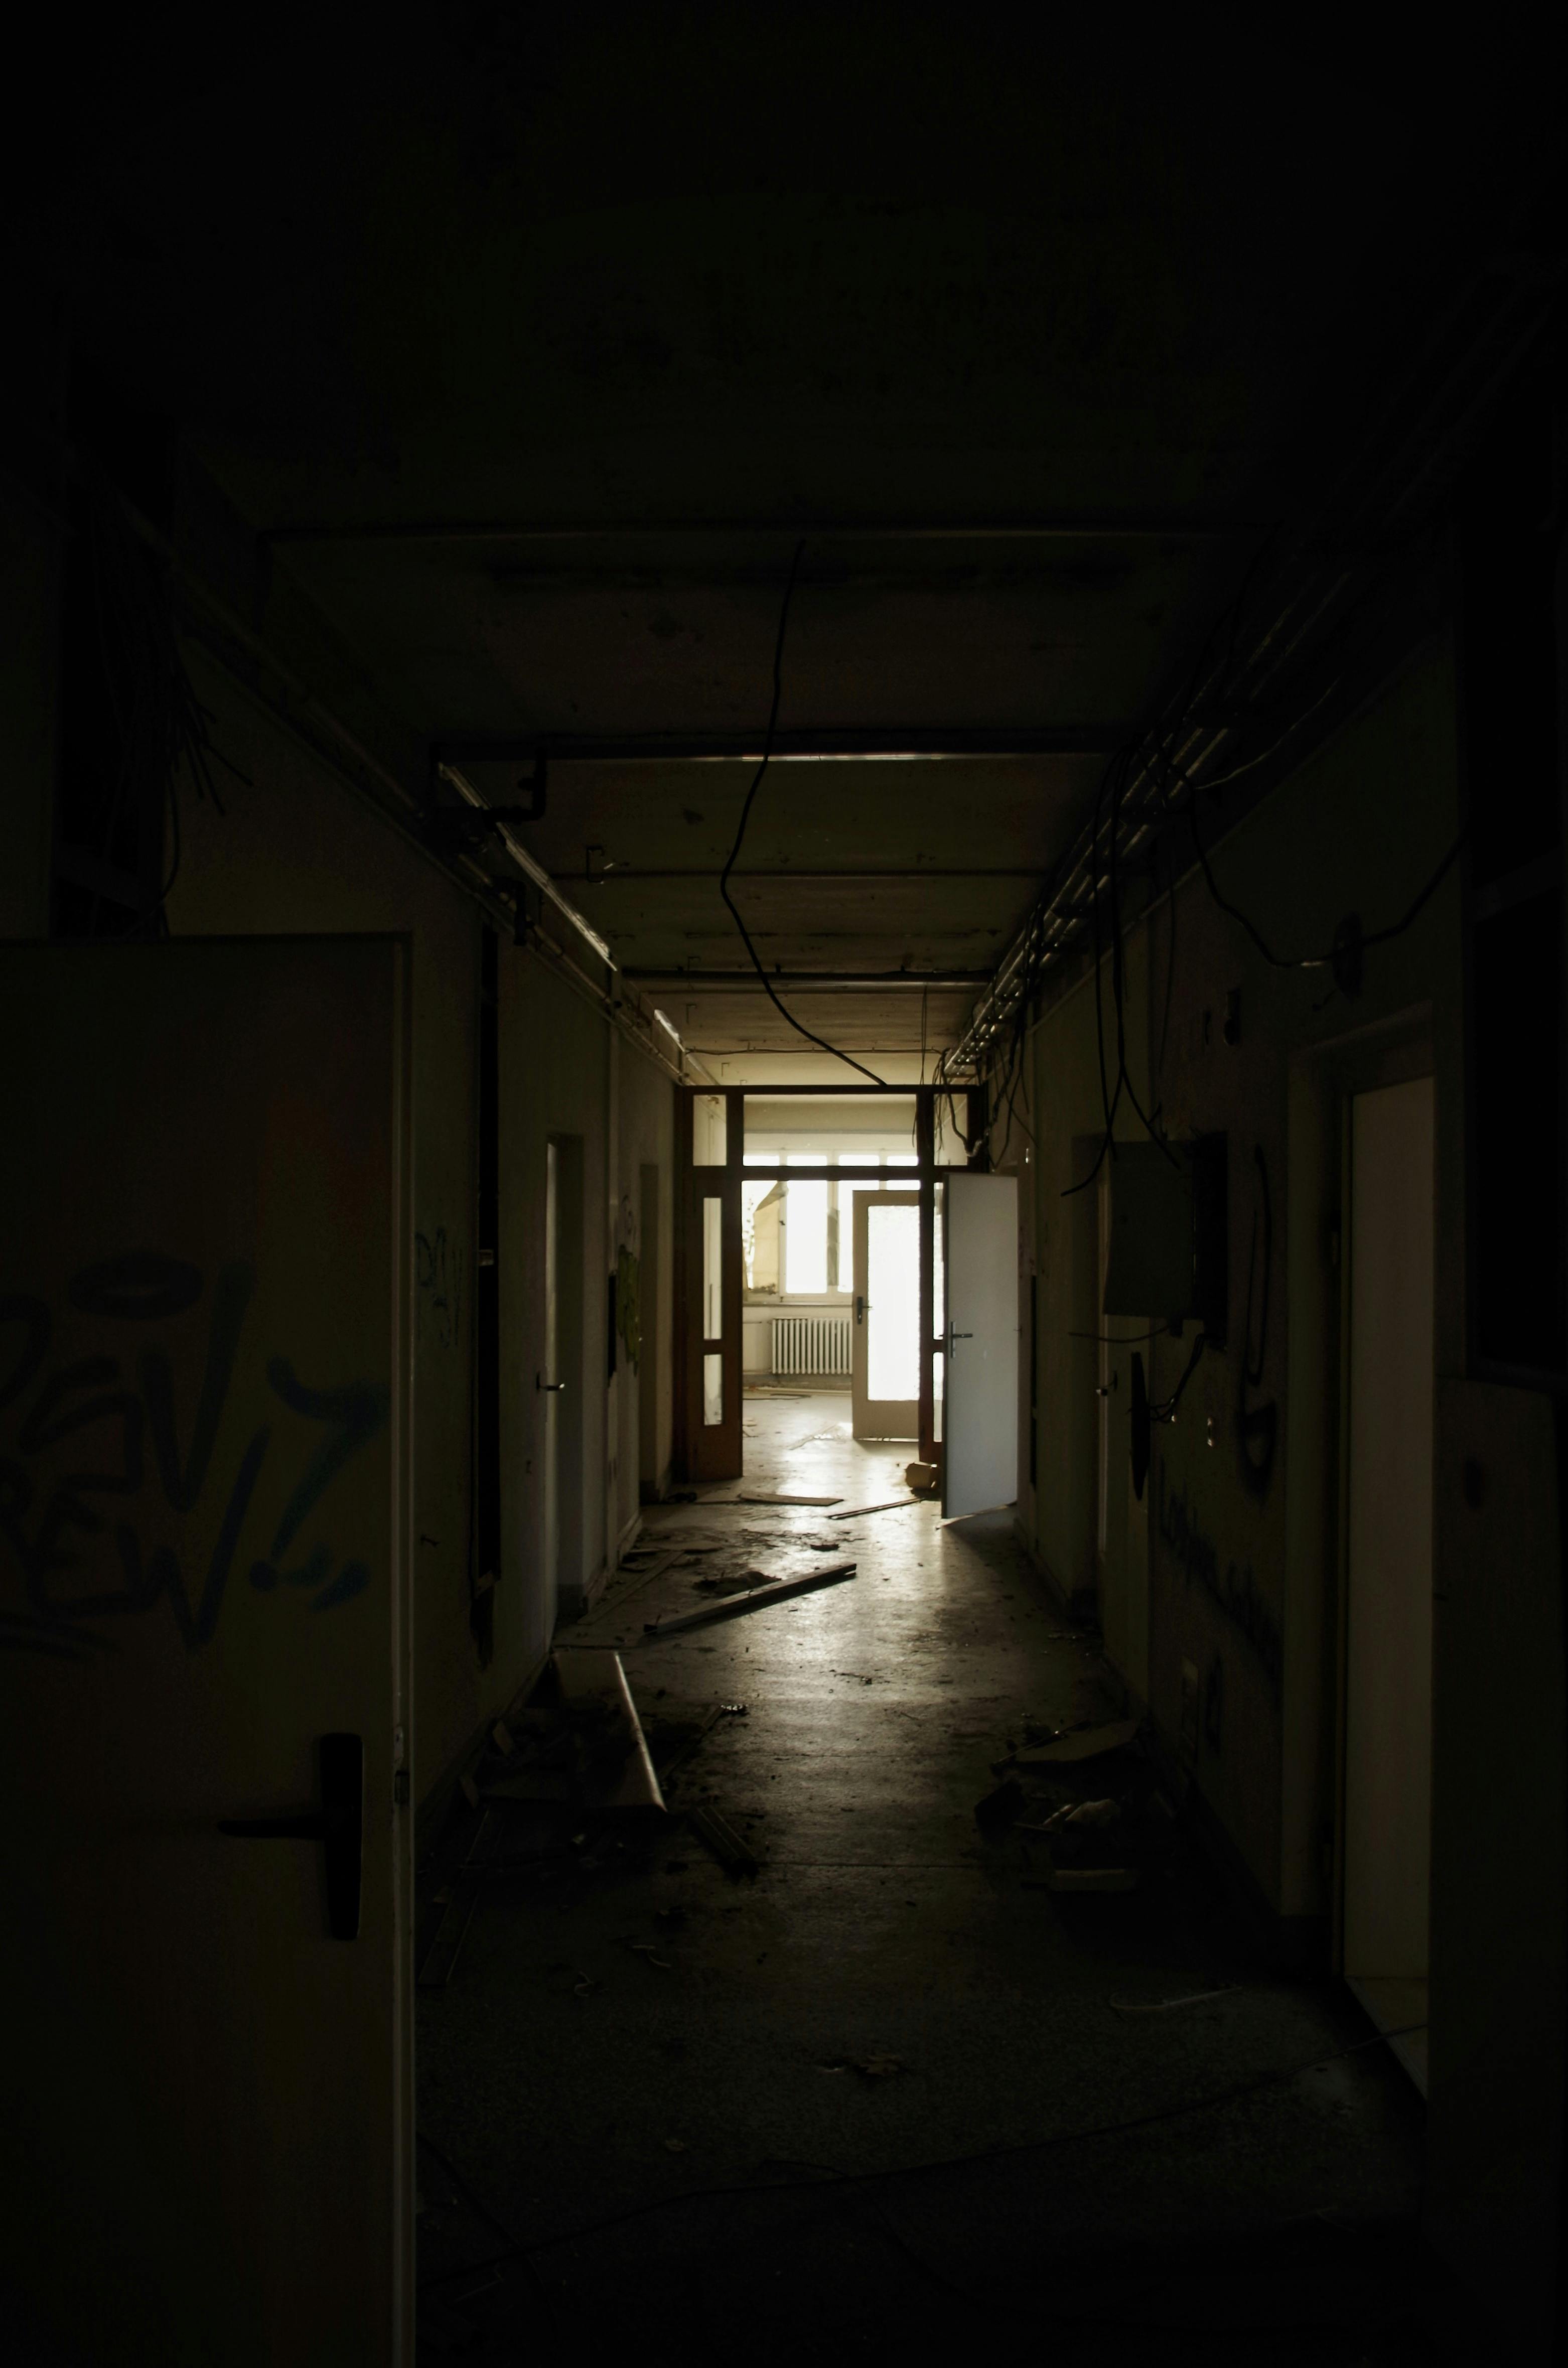 abandoned building with dark hallway